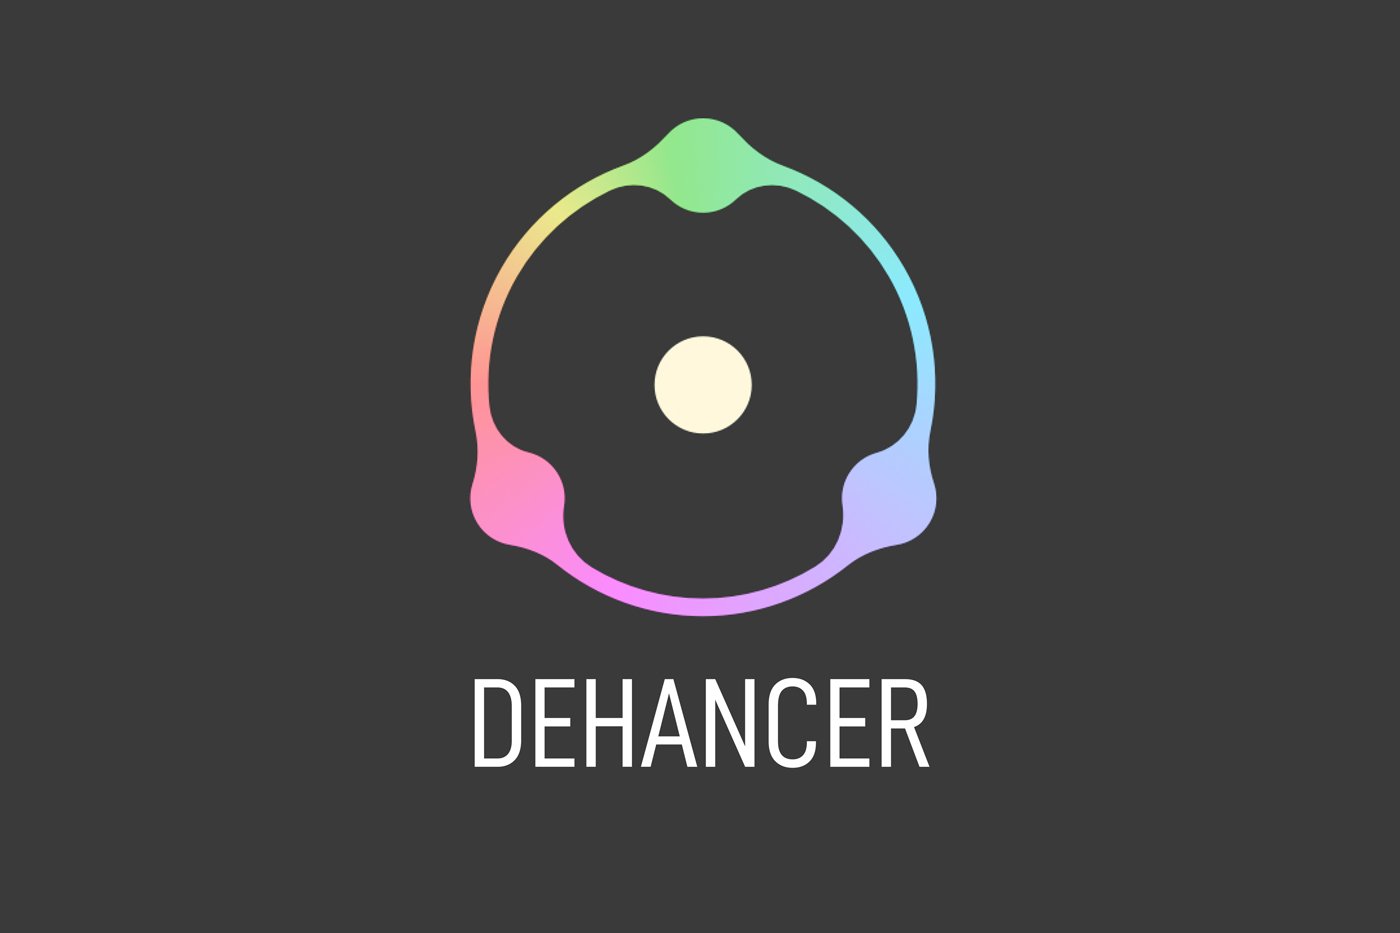 Dehancer